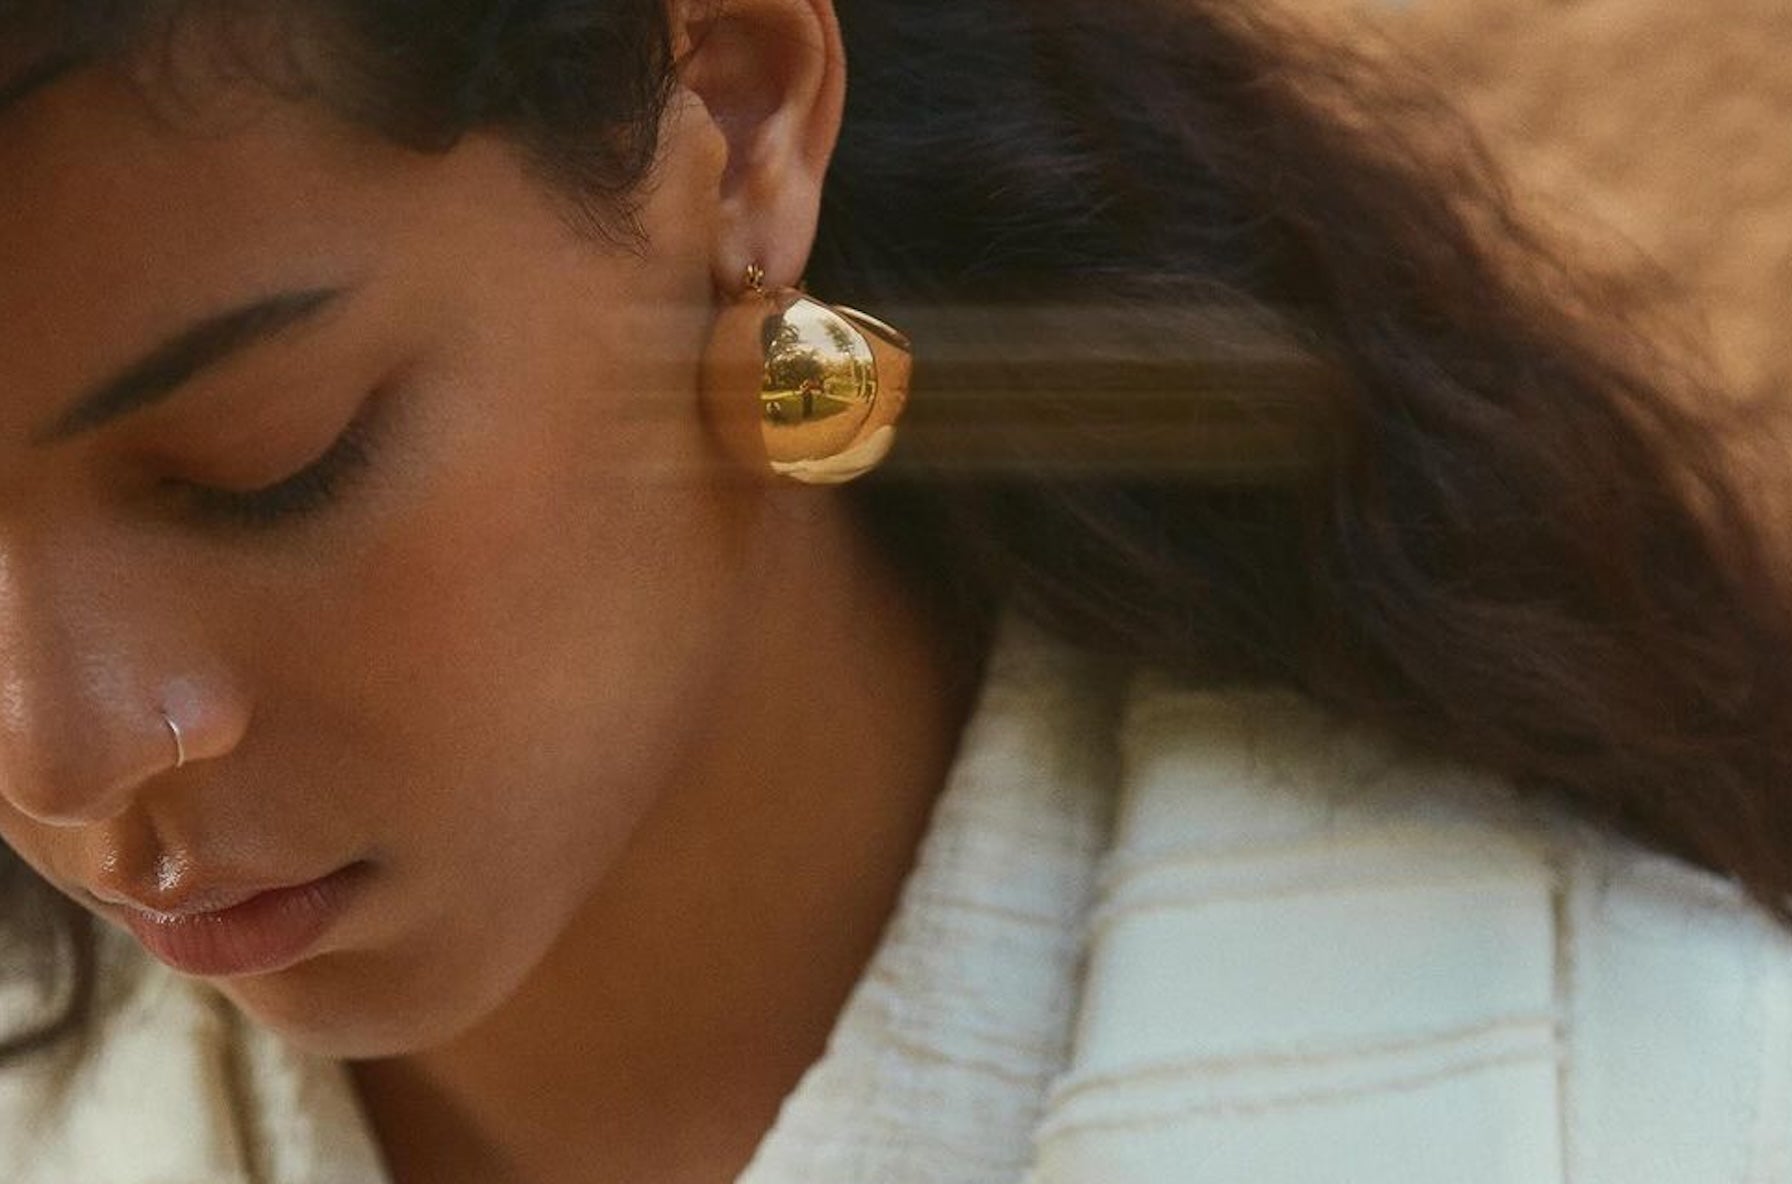 reliquia jewellery oversized gold earrings at blanca fashion week